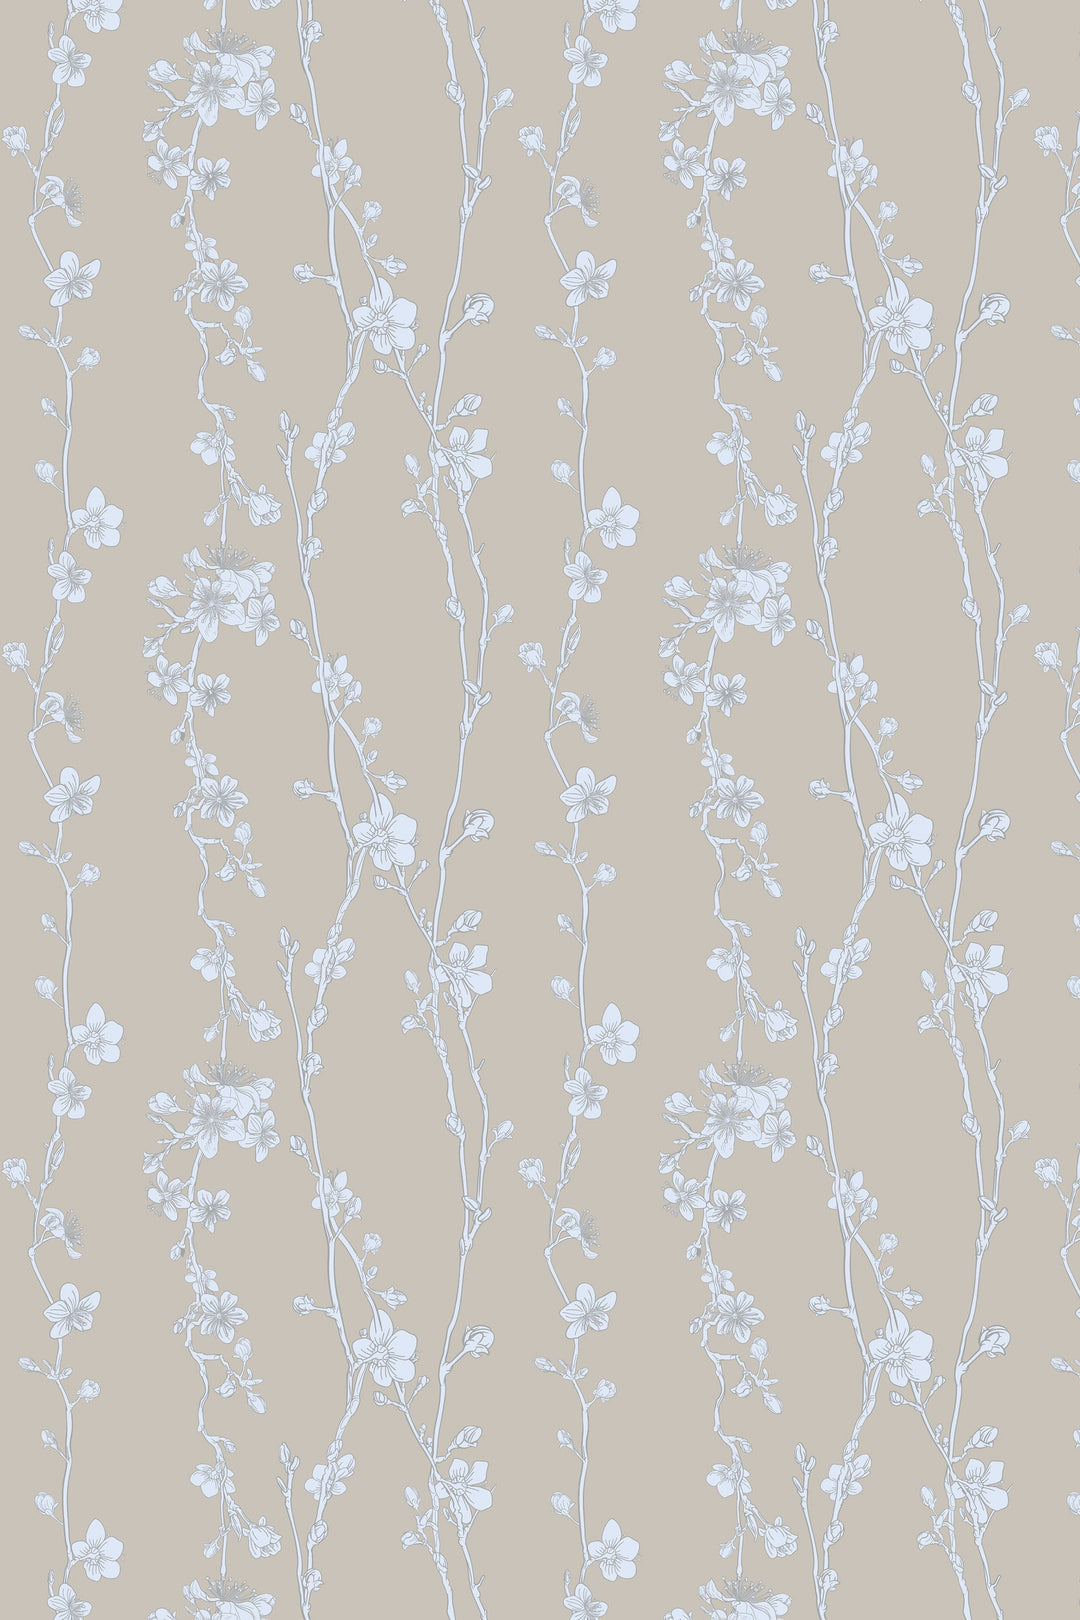 Botanical Branches of White Sakura on a Tan Background Removable Wallpaper #3407